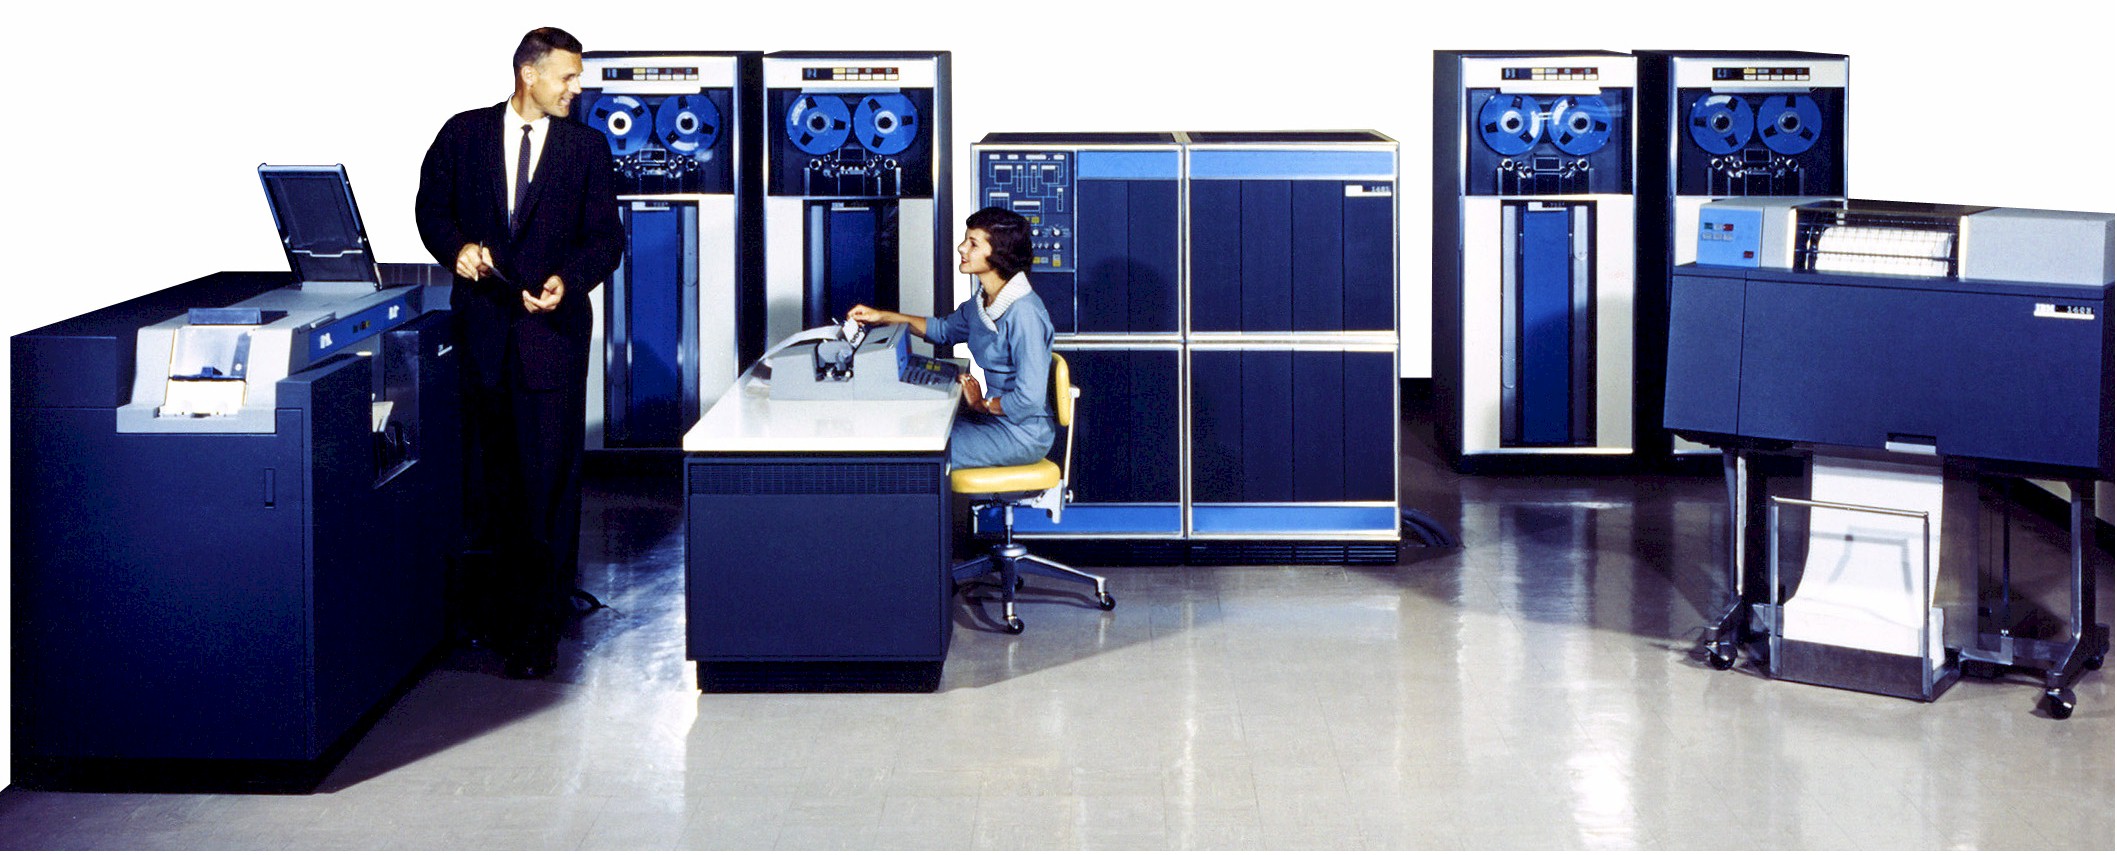 IBM1401